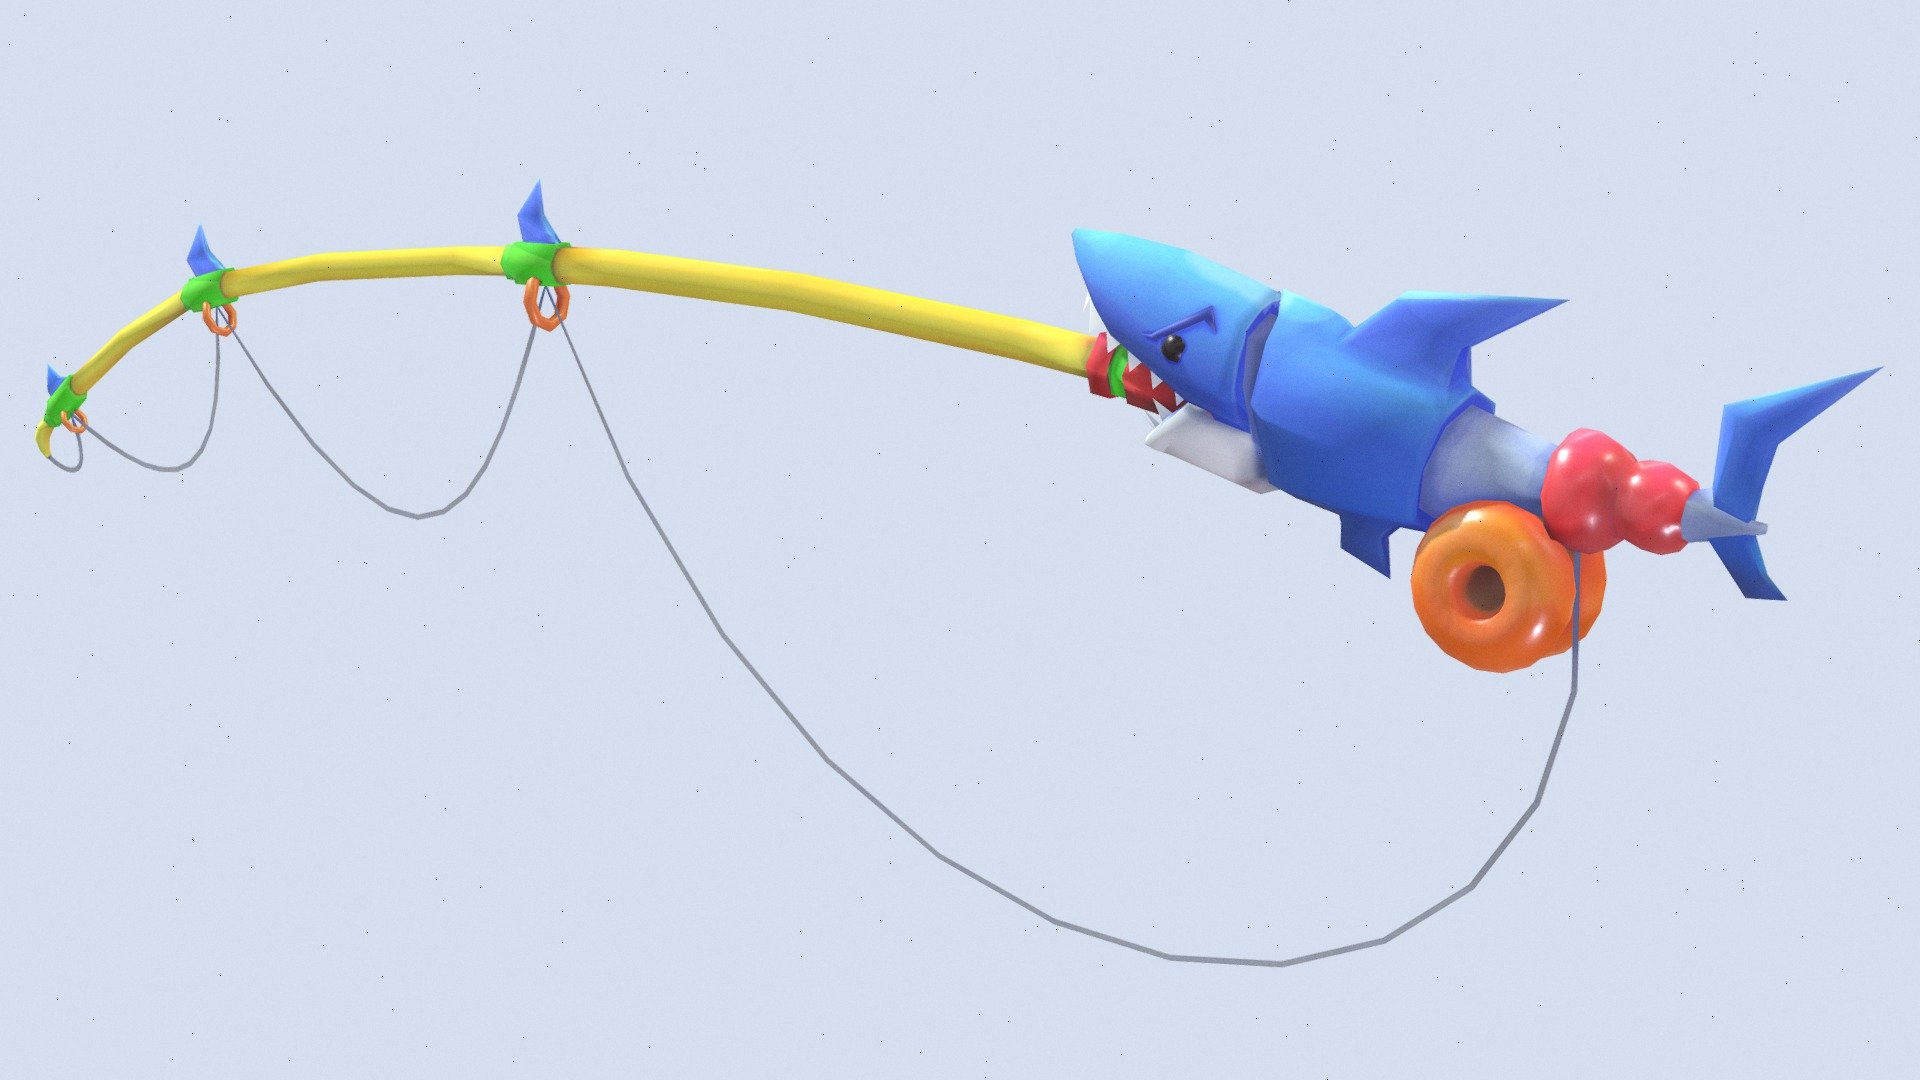 Shark fishing rod weapon made in Blender - Shark Fishing Rod - 3D model by 5hu4n 3d model